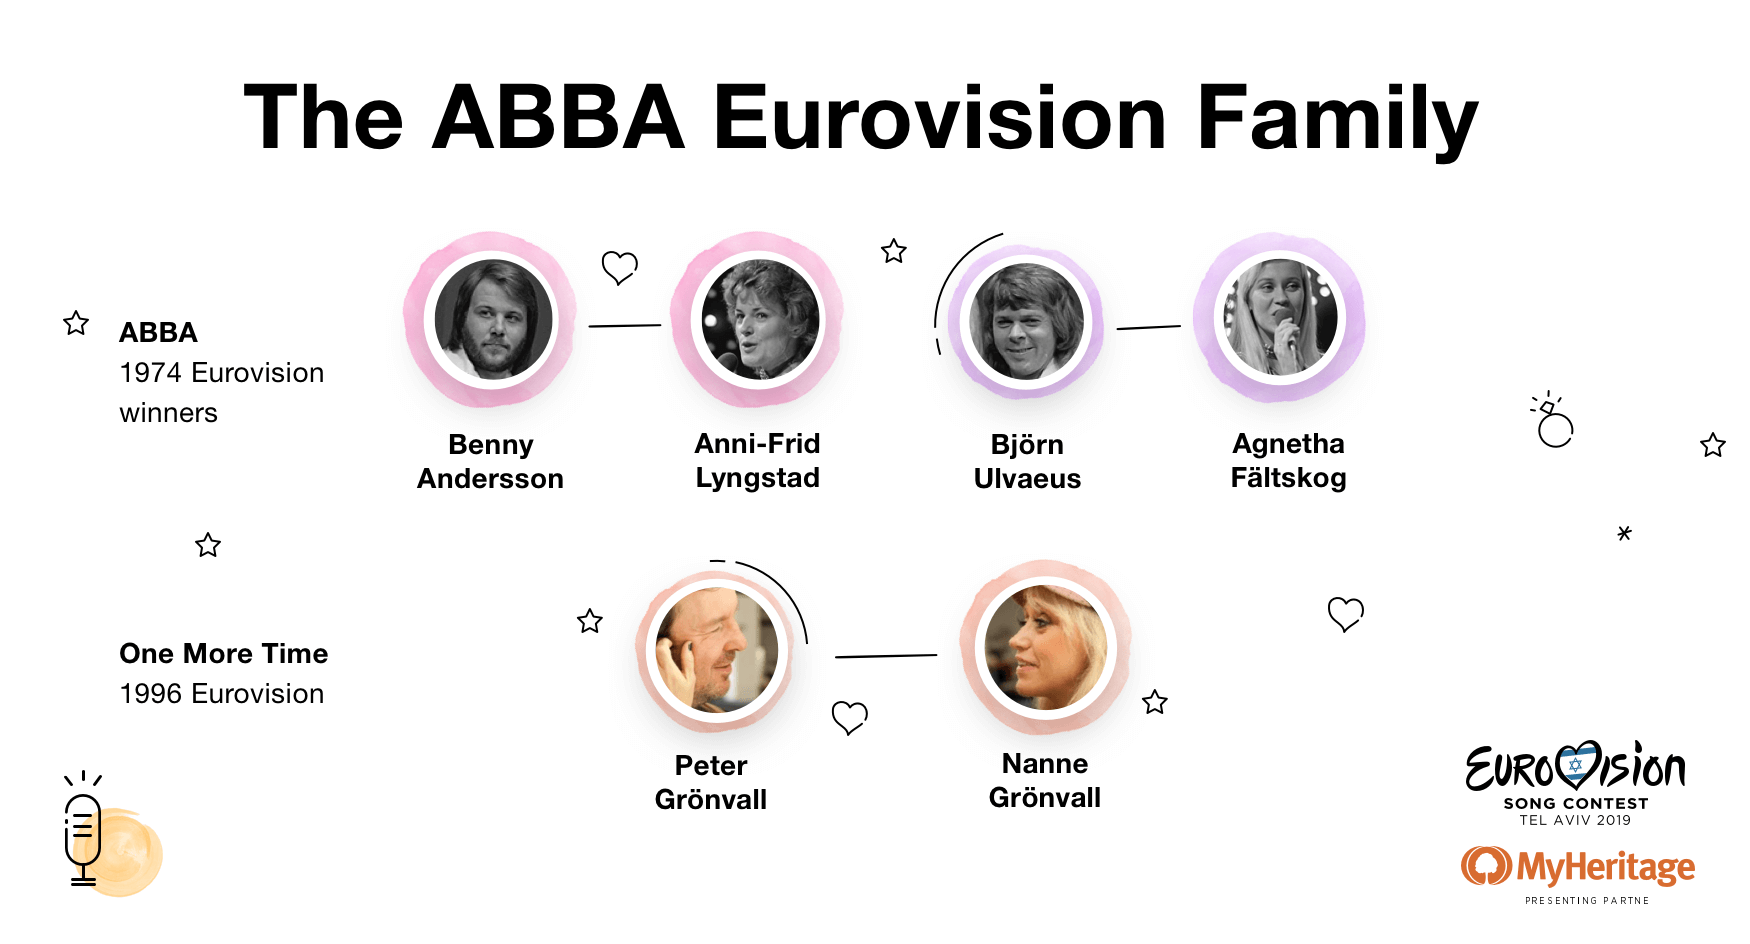 The ABBA Eurovision Family